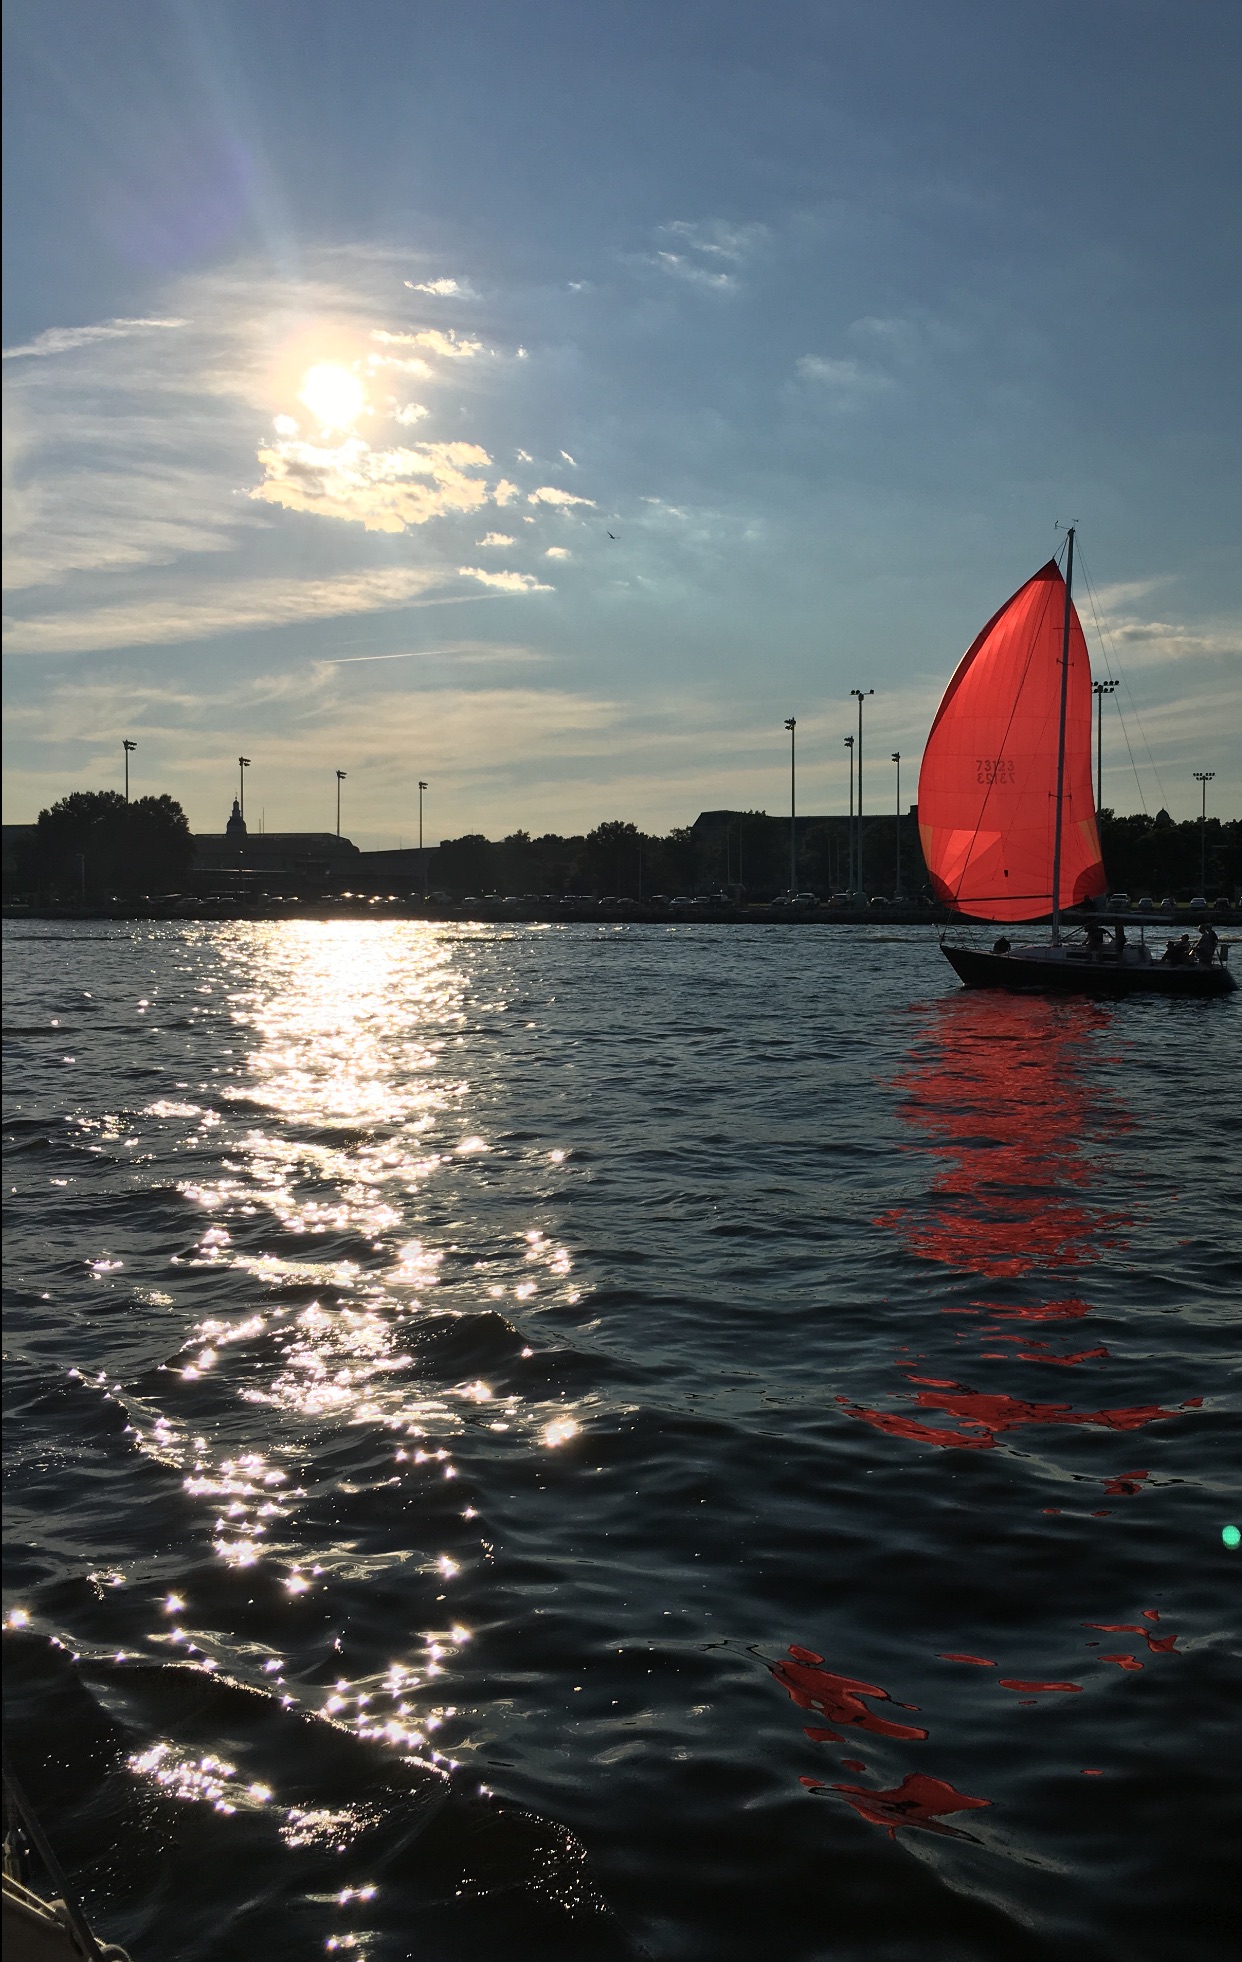 Red sail on a sailboat at sunset